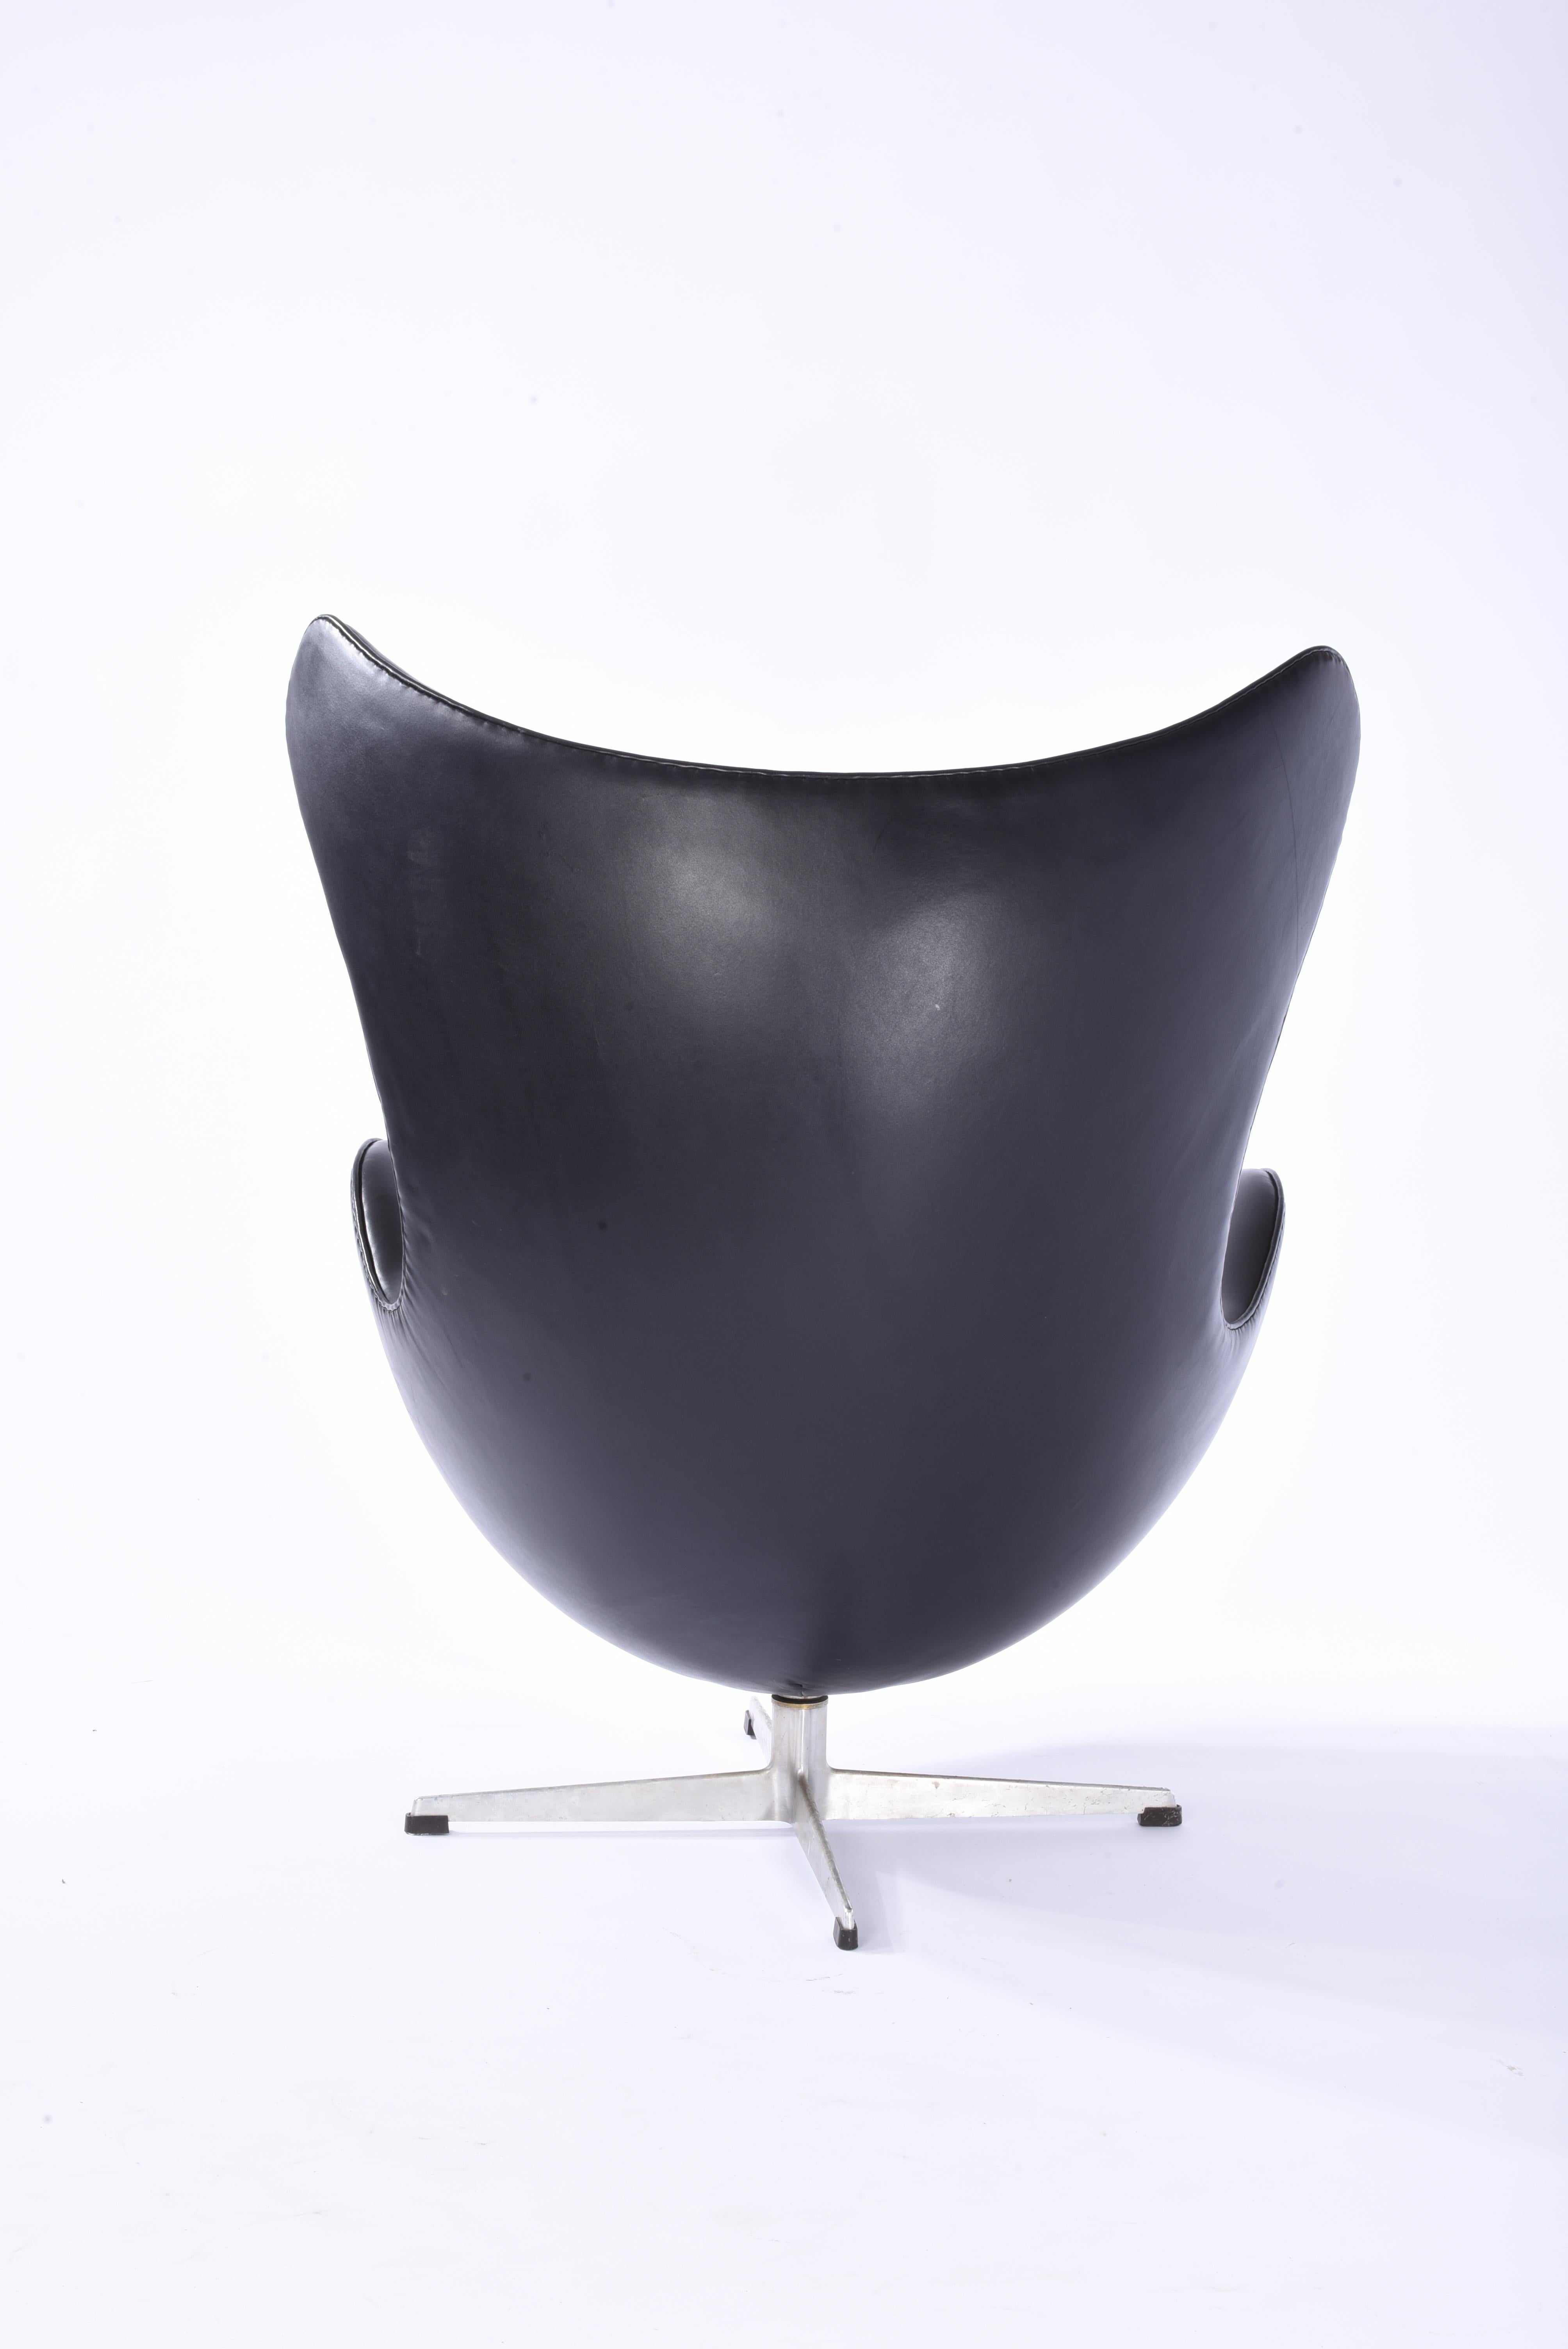 Danish Arne Jacobsen Egg Chair, First Edition 1959